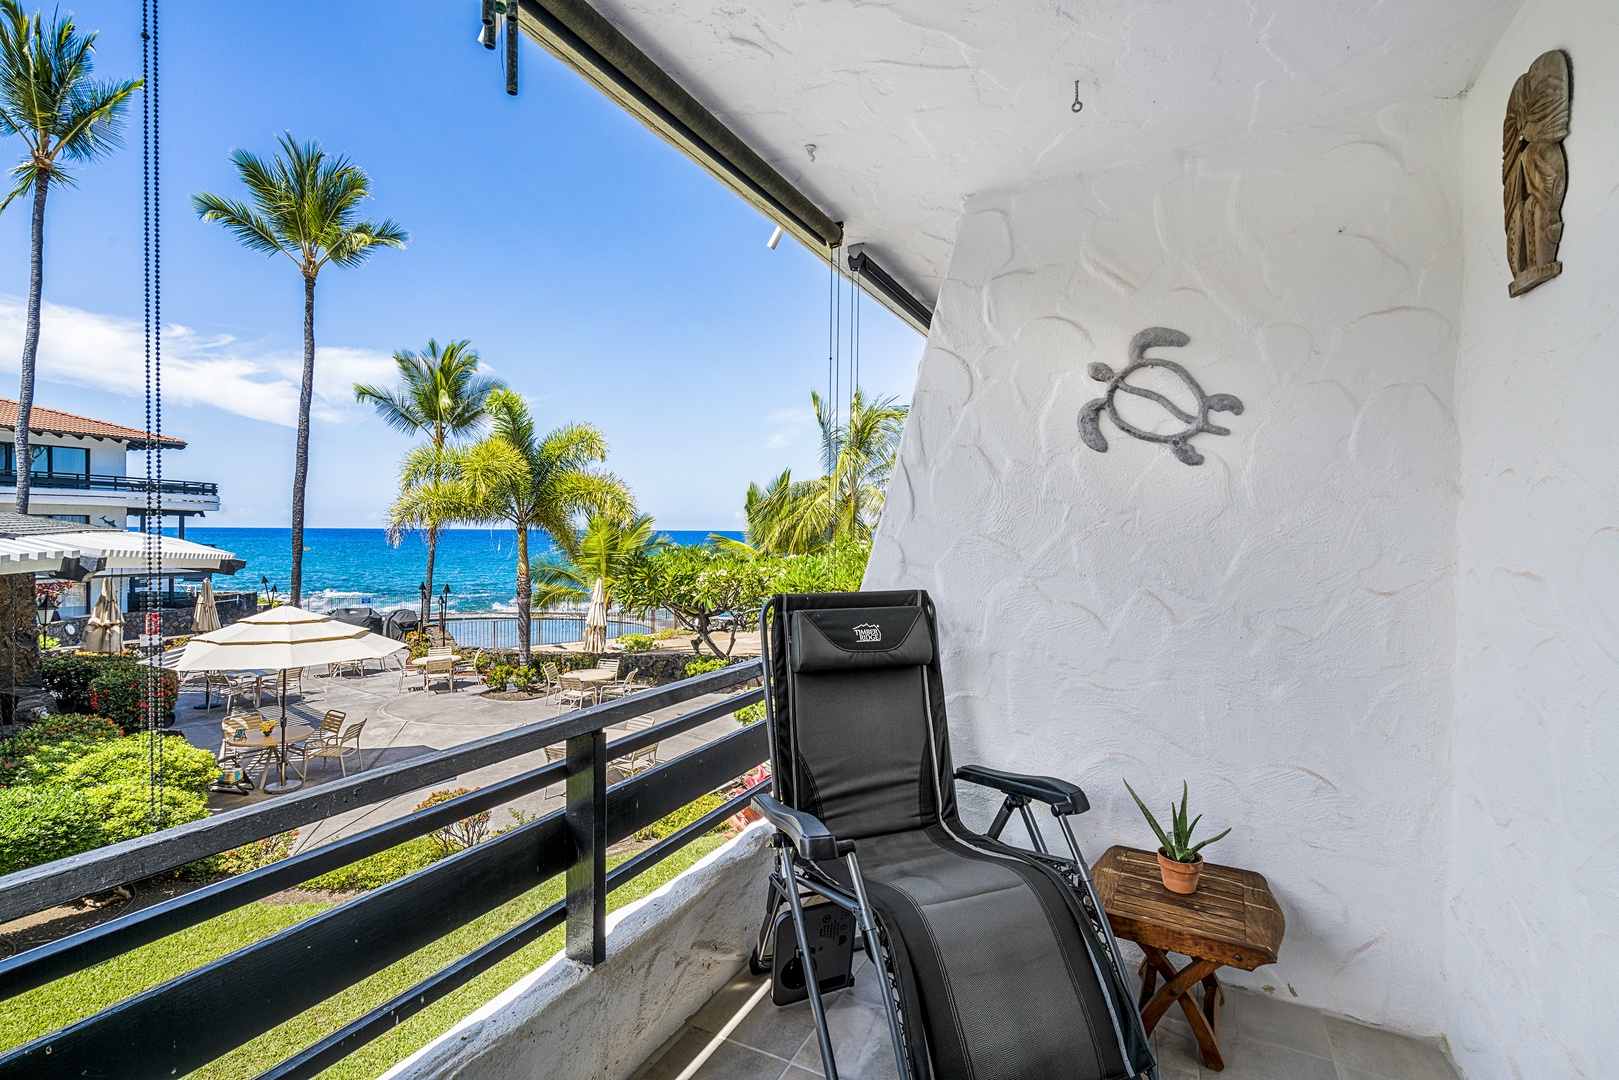 Kailua Kona Vacation Rentals, Casa De Emdeko 235 - Lounge on the Lanai with the beverage of your choice